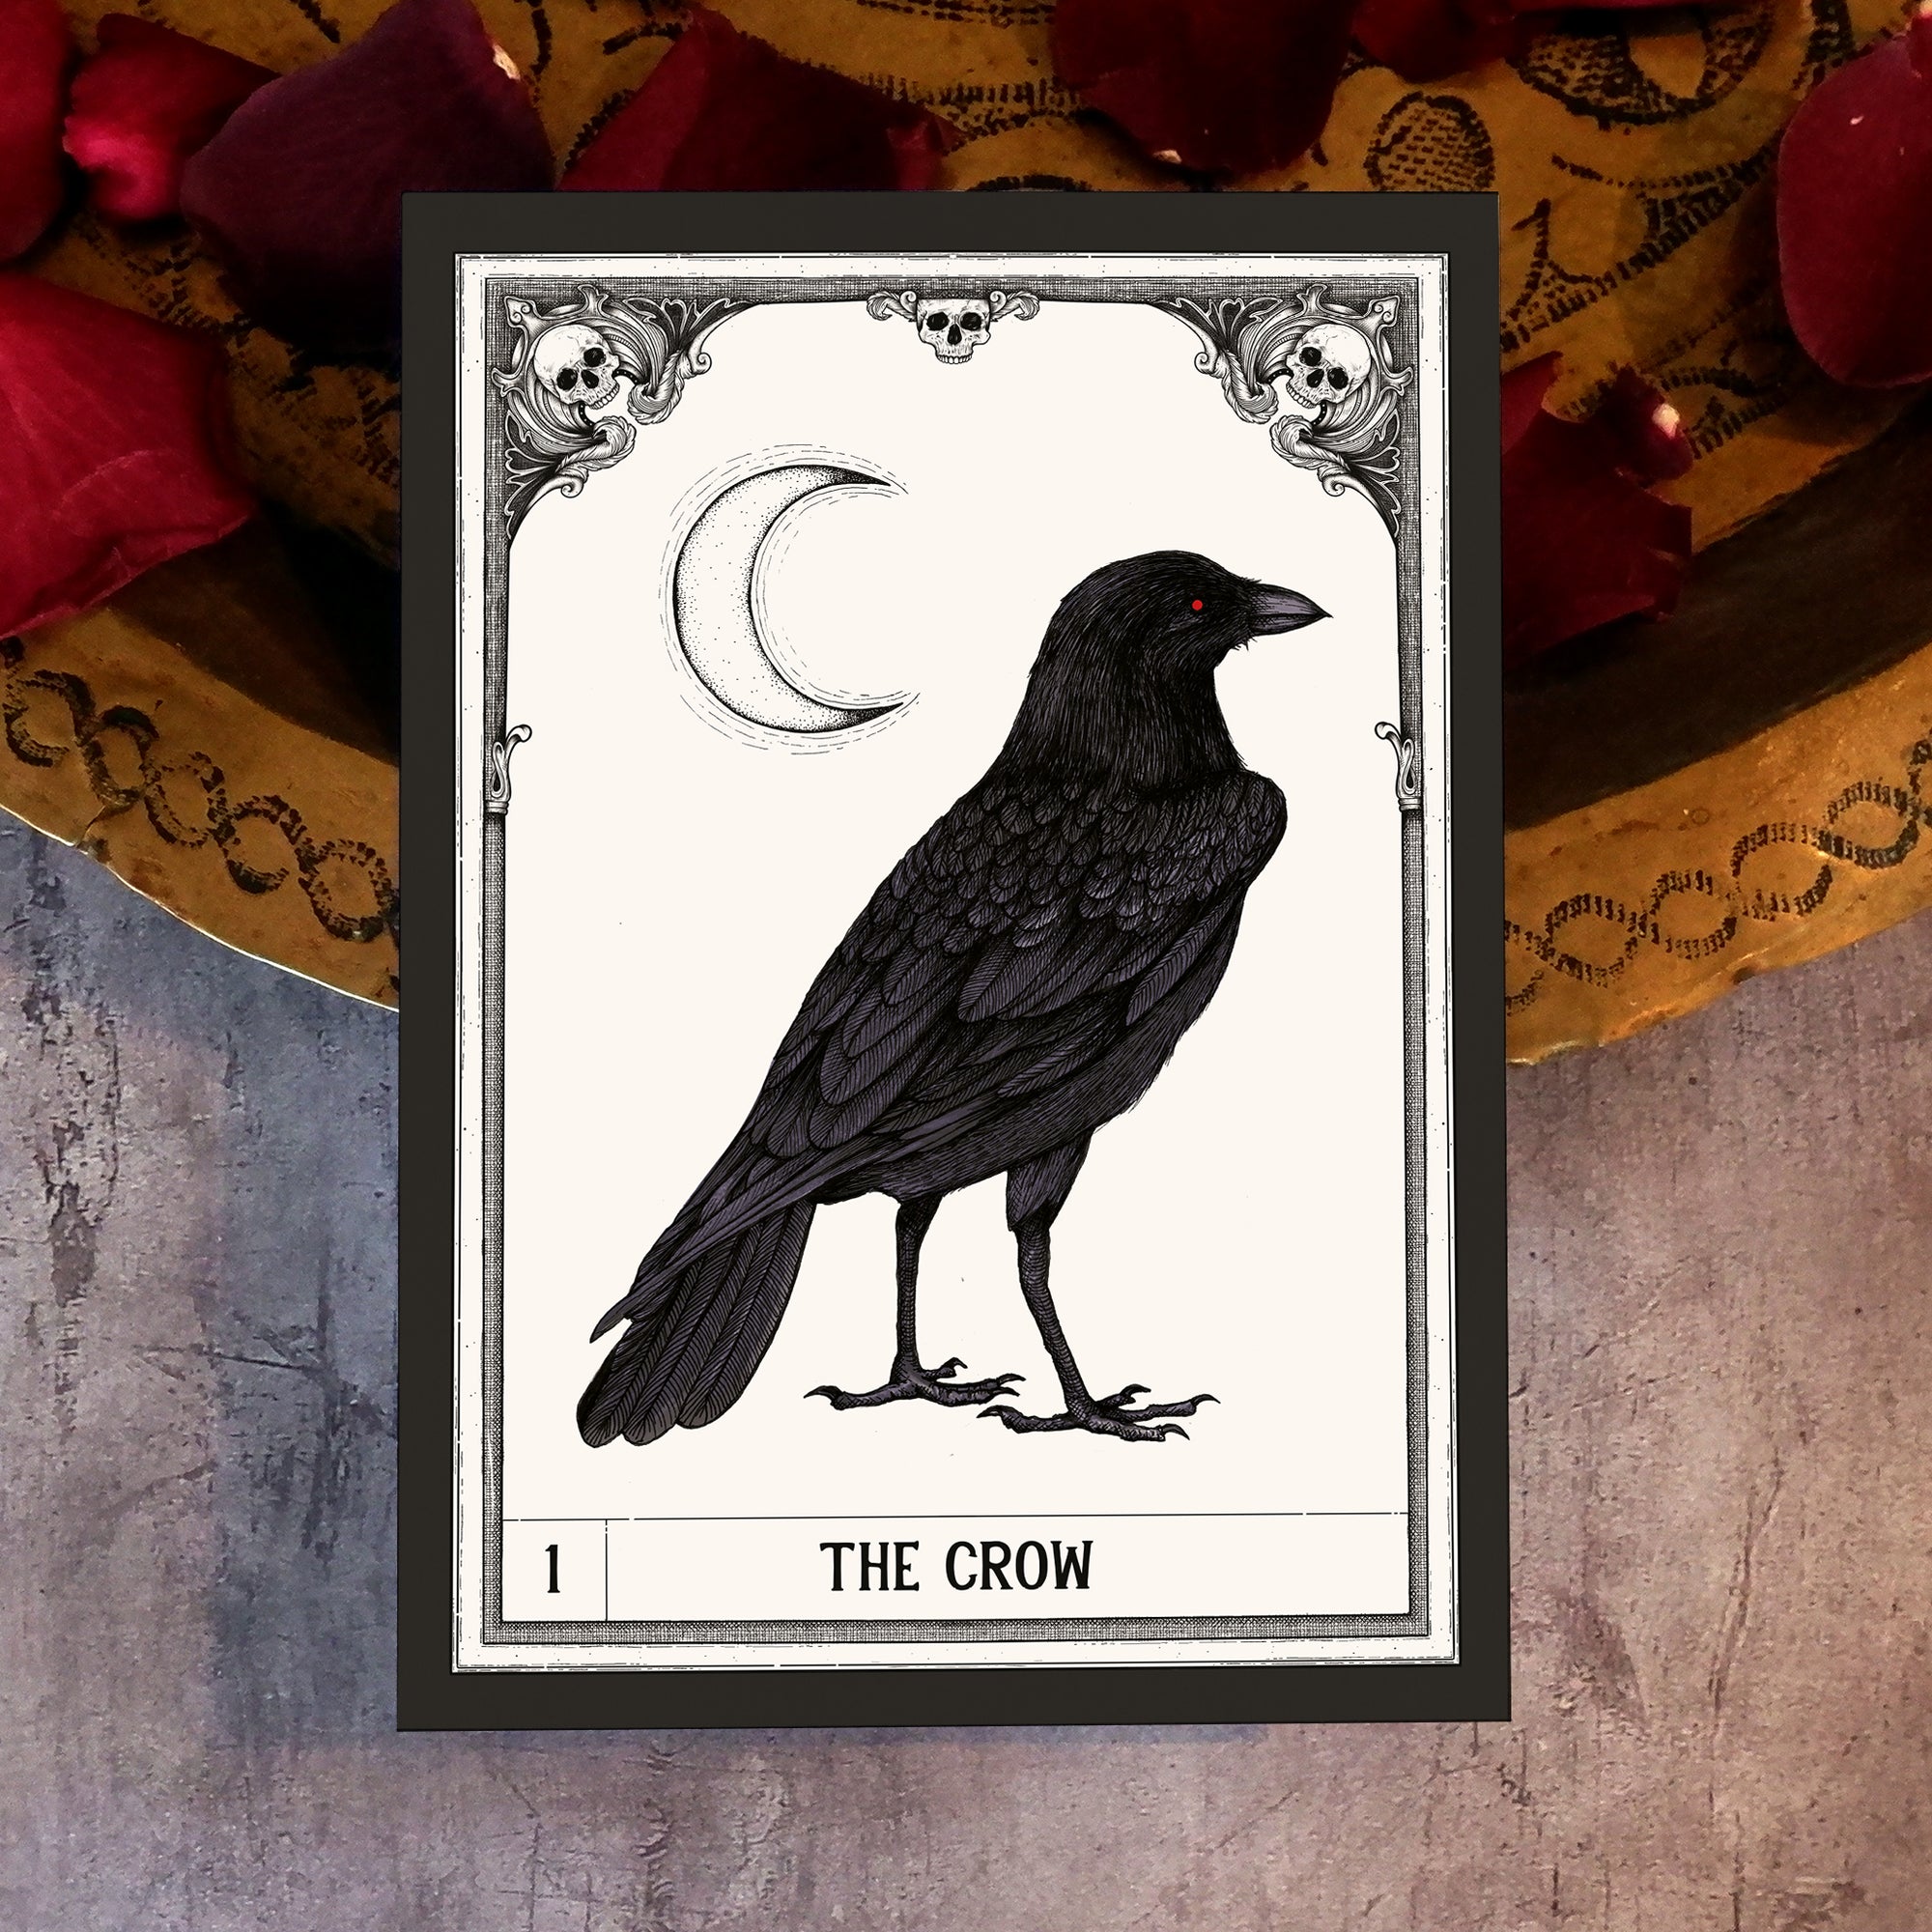 Morteria #1 - The Crow Mini Print